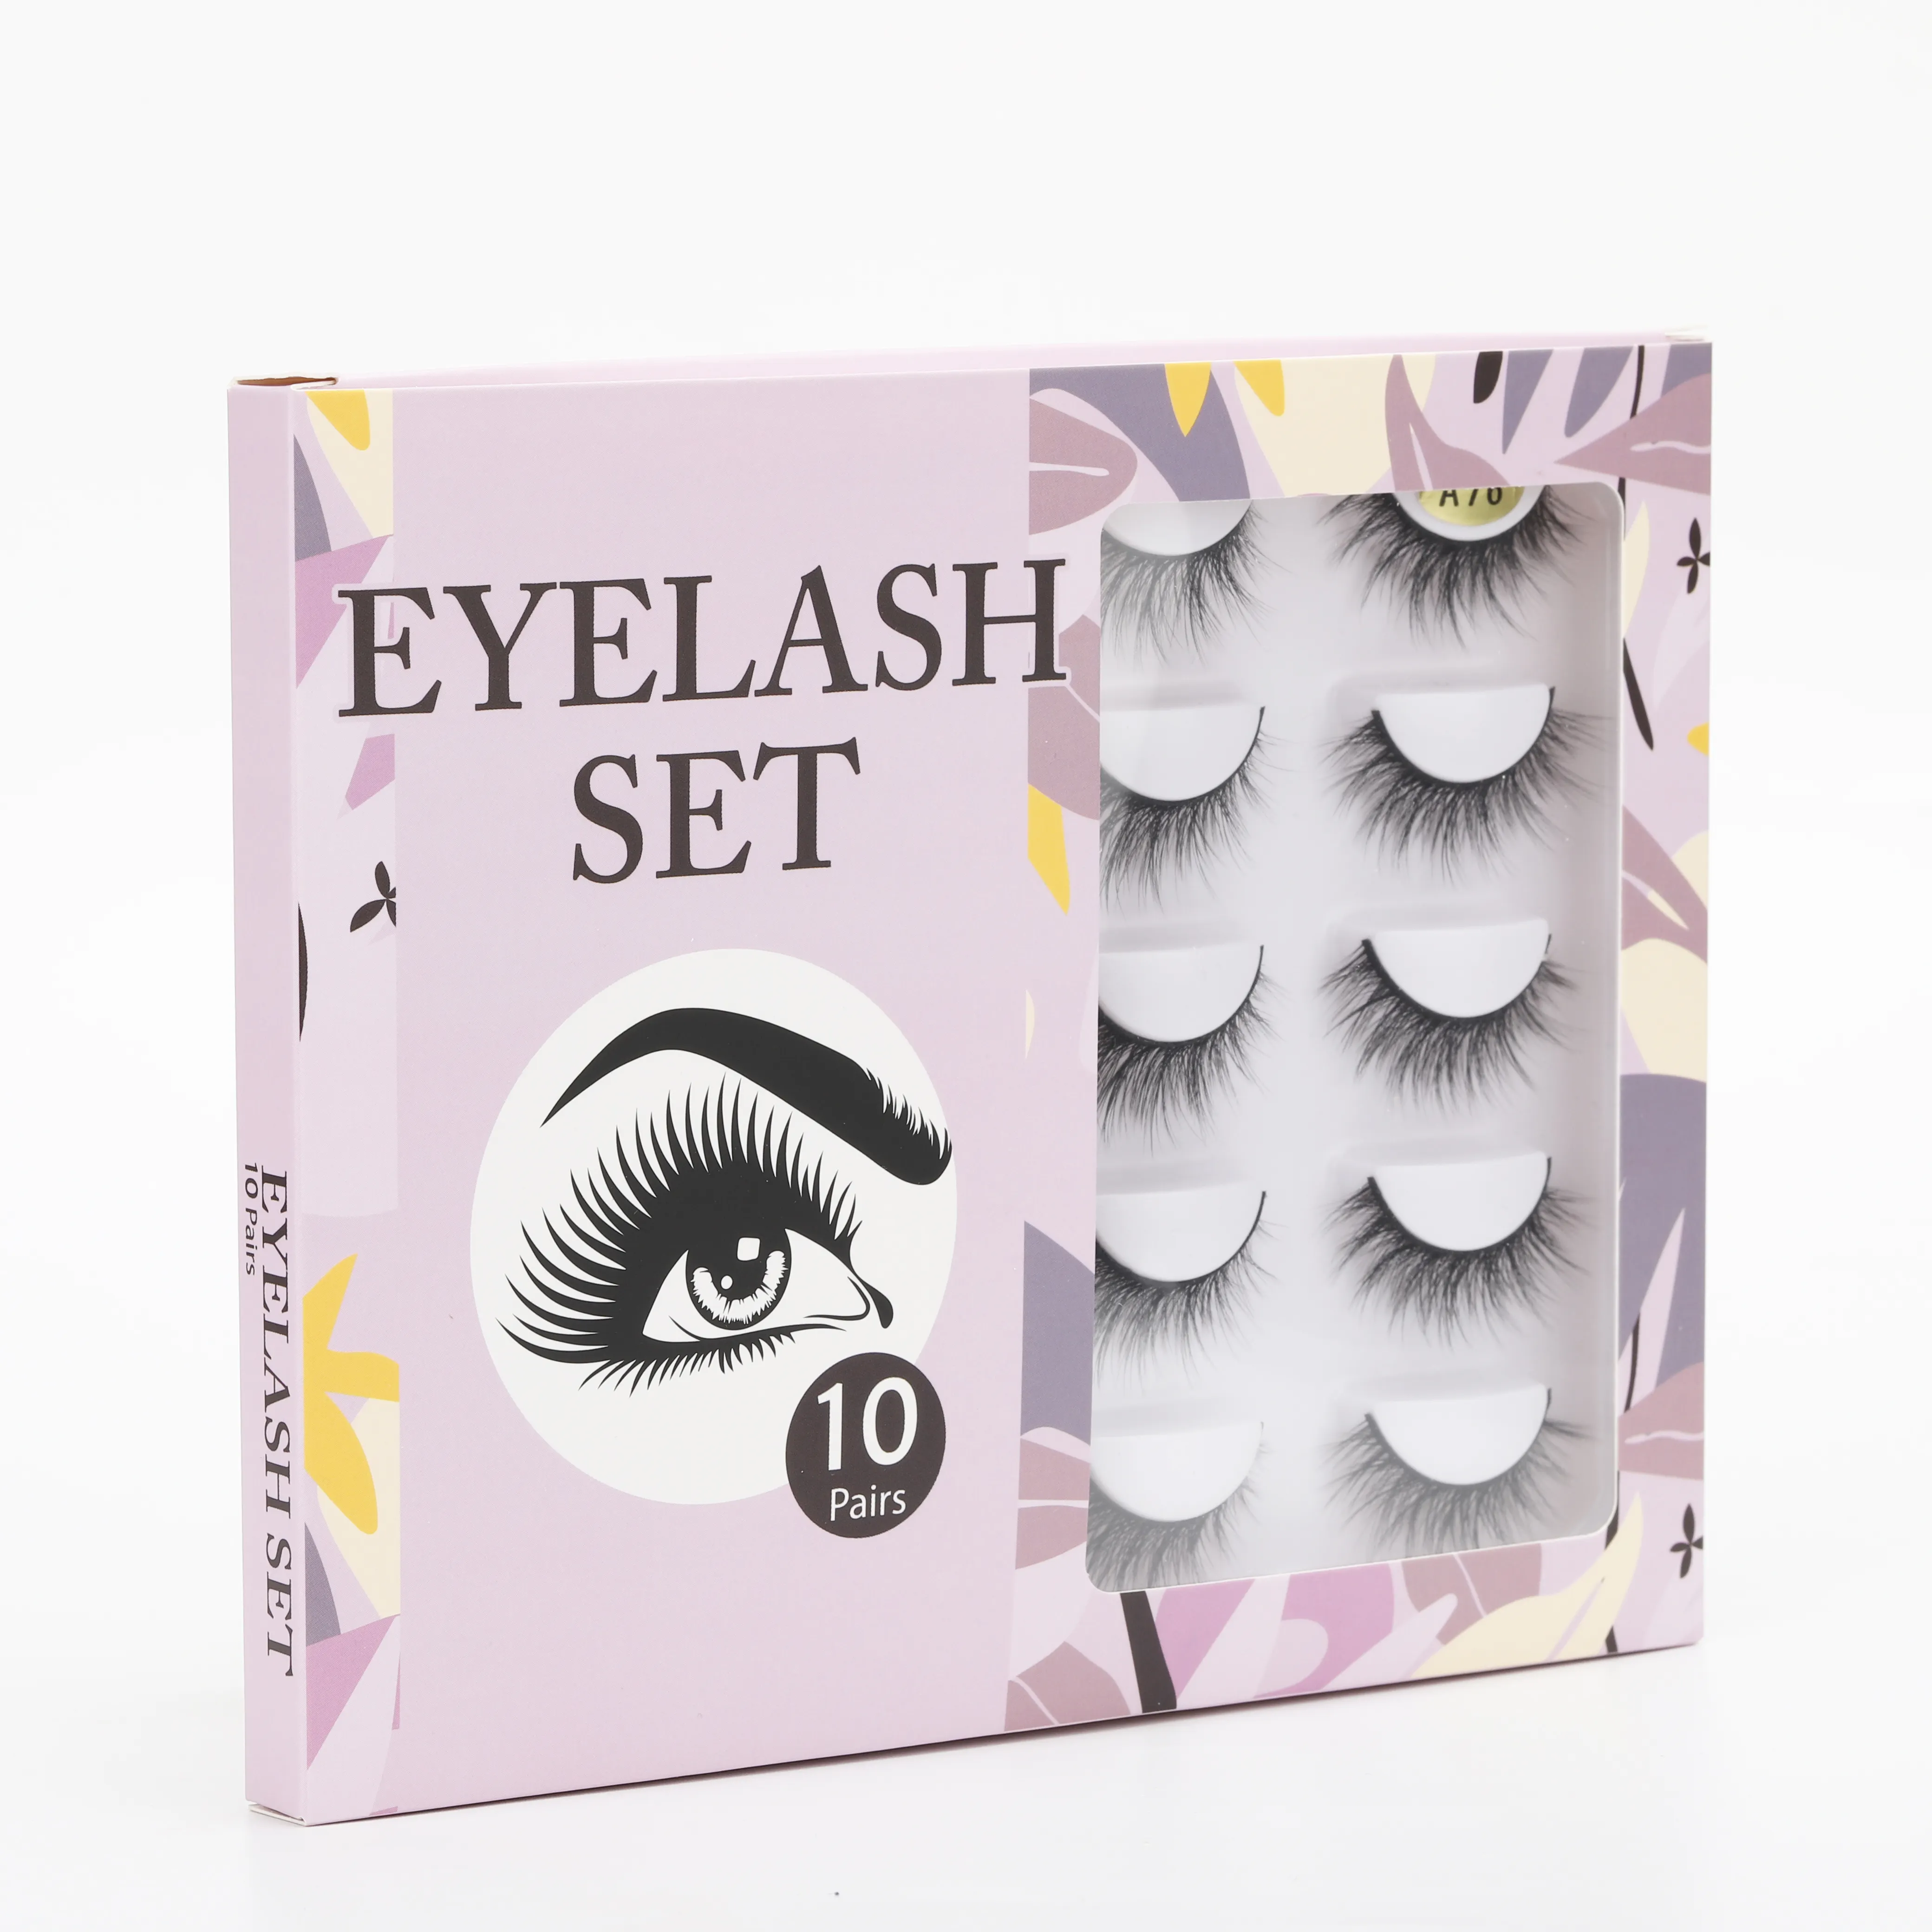 अमेज़न गर्म बिक्री 10 जोड़े आईलाइनर चुंबकीय Eyelashes सेट 3D अशुद्ध मिंक चुंबकीय झूठी Eyelashes